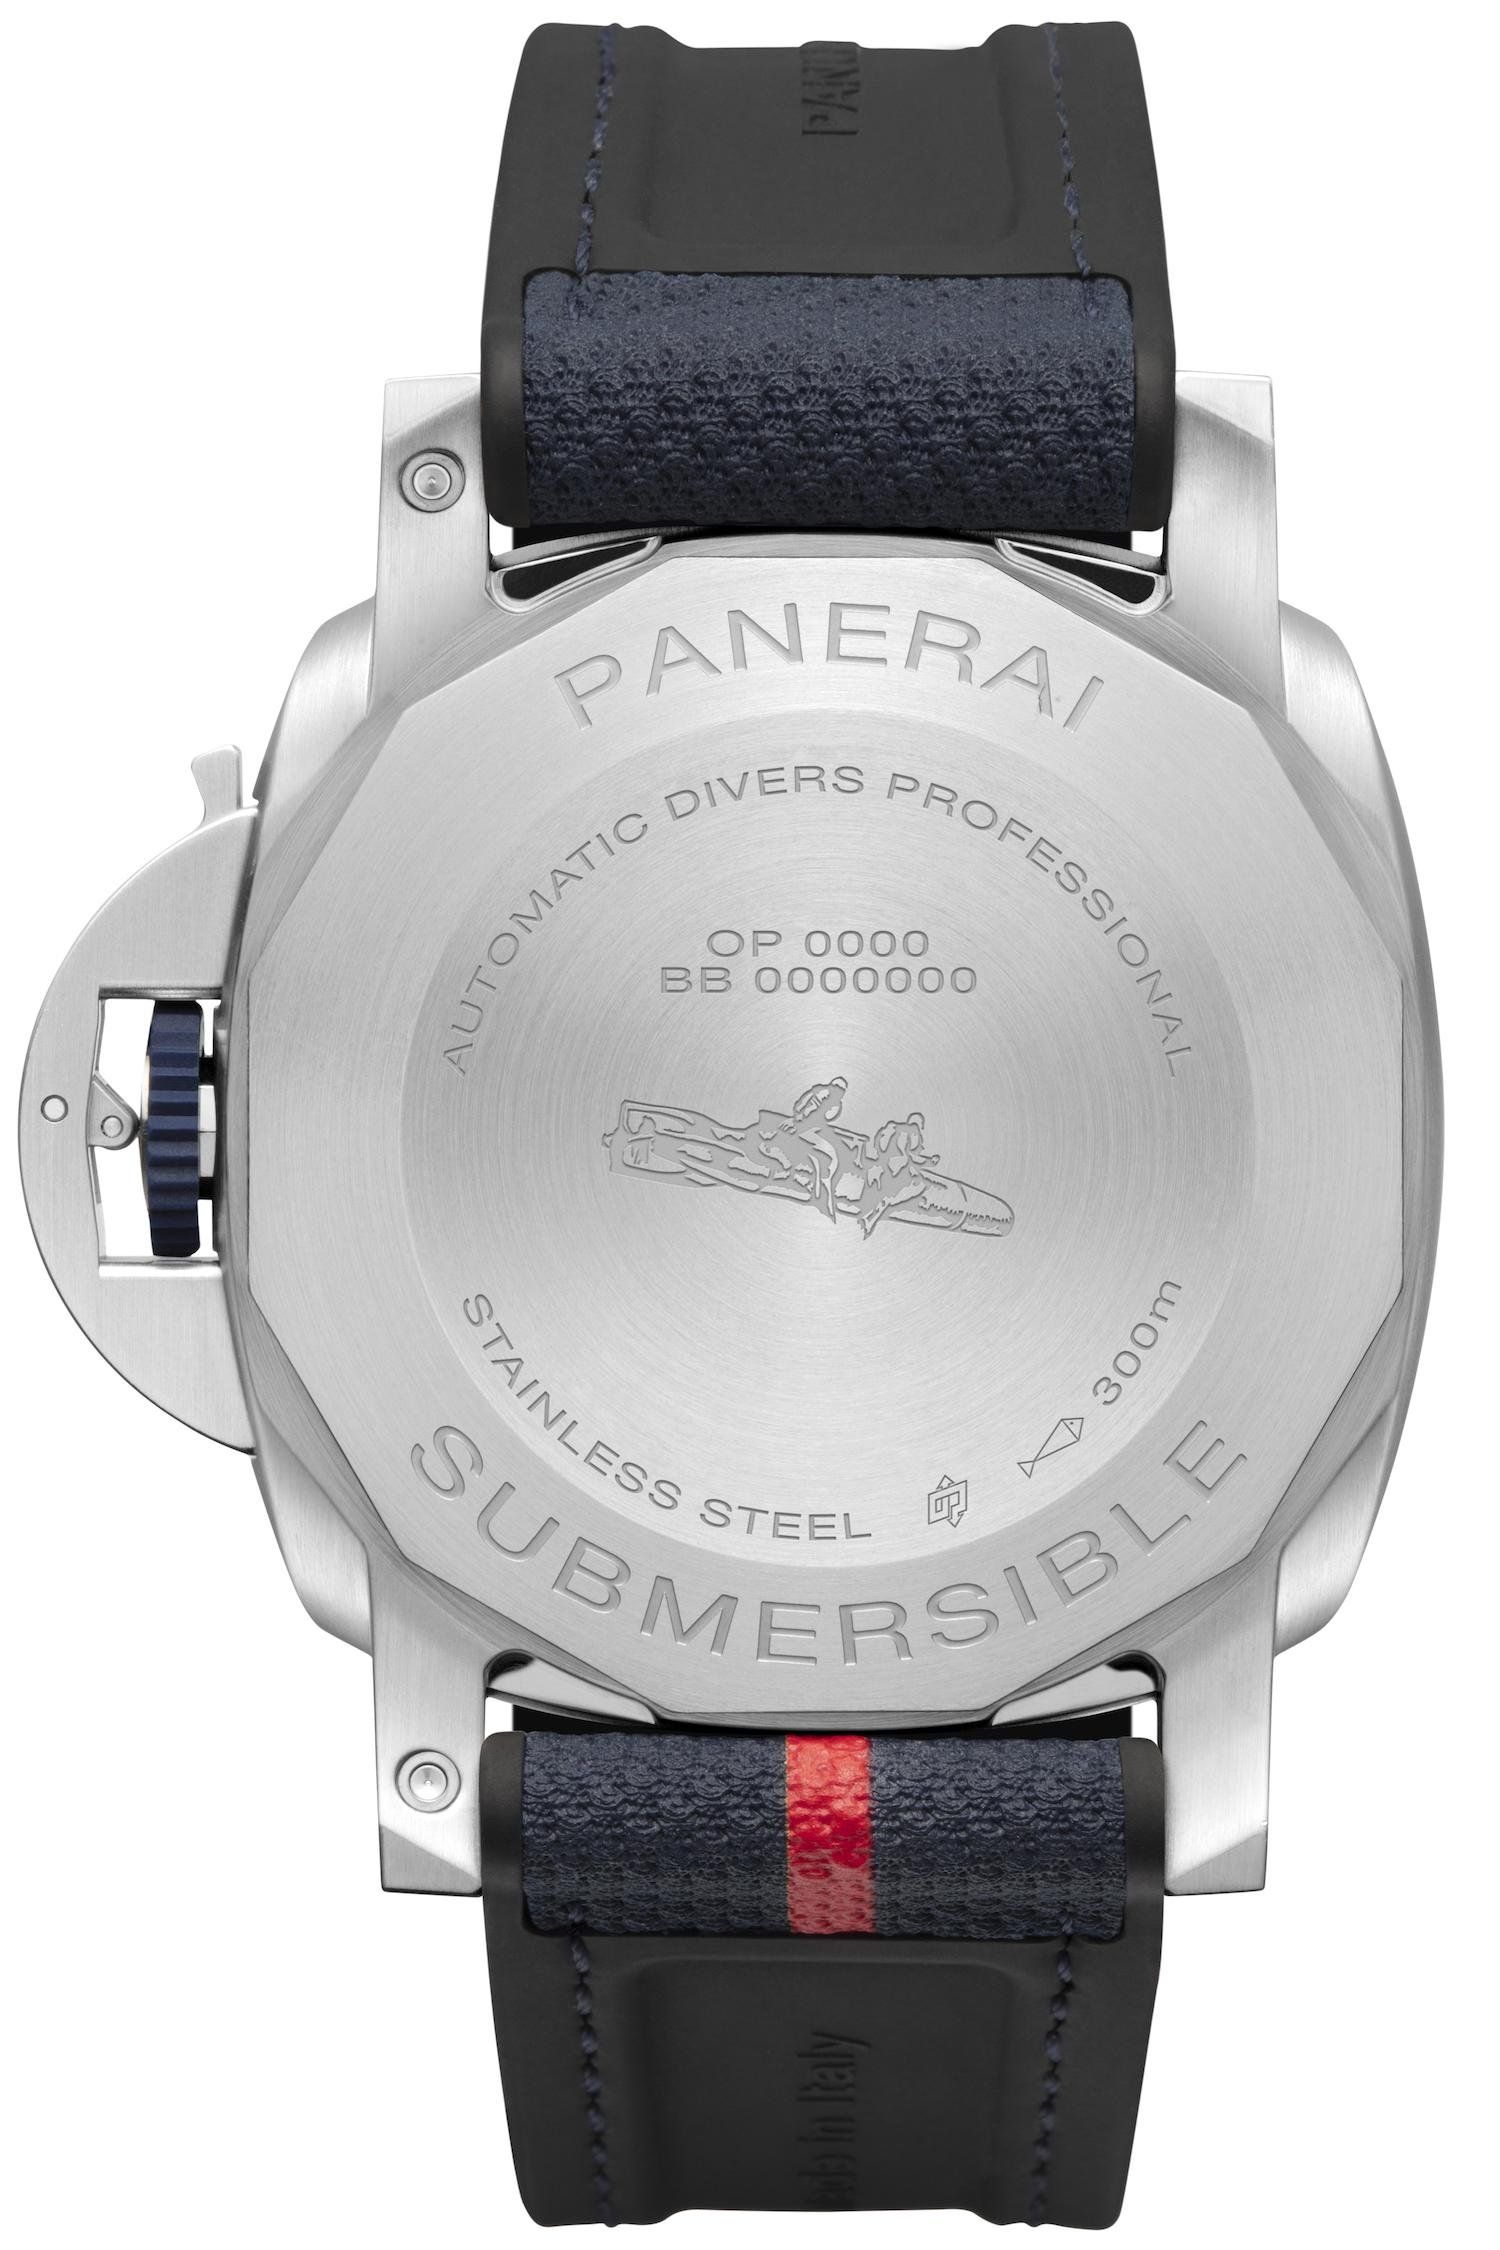 Watches And Wonders 2022: Panerai- Submersible QuarantaQuattro Luna Rossa Striking The Right Balance